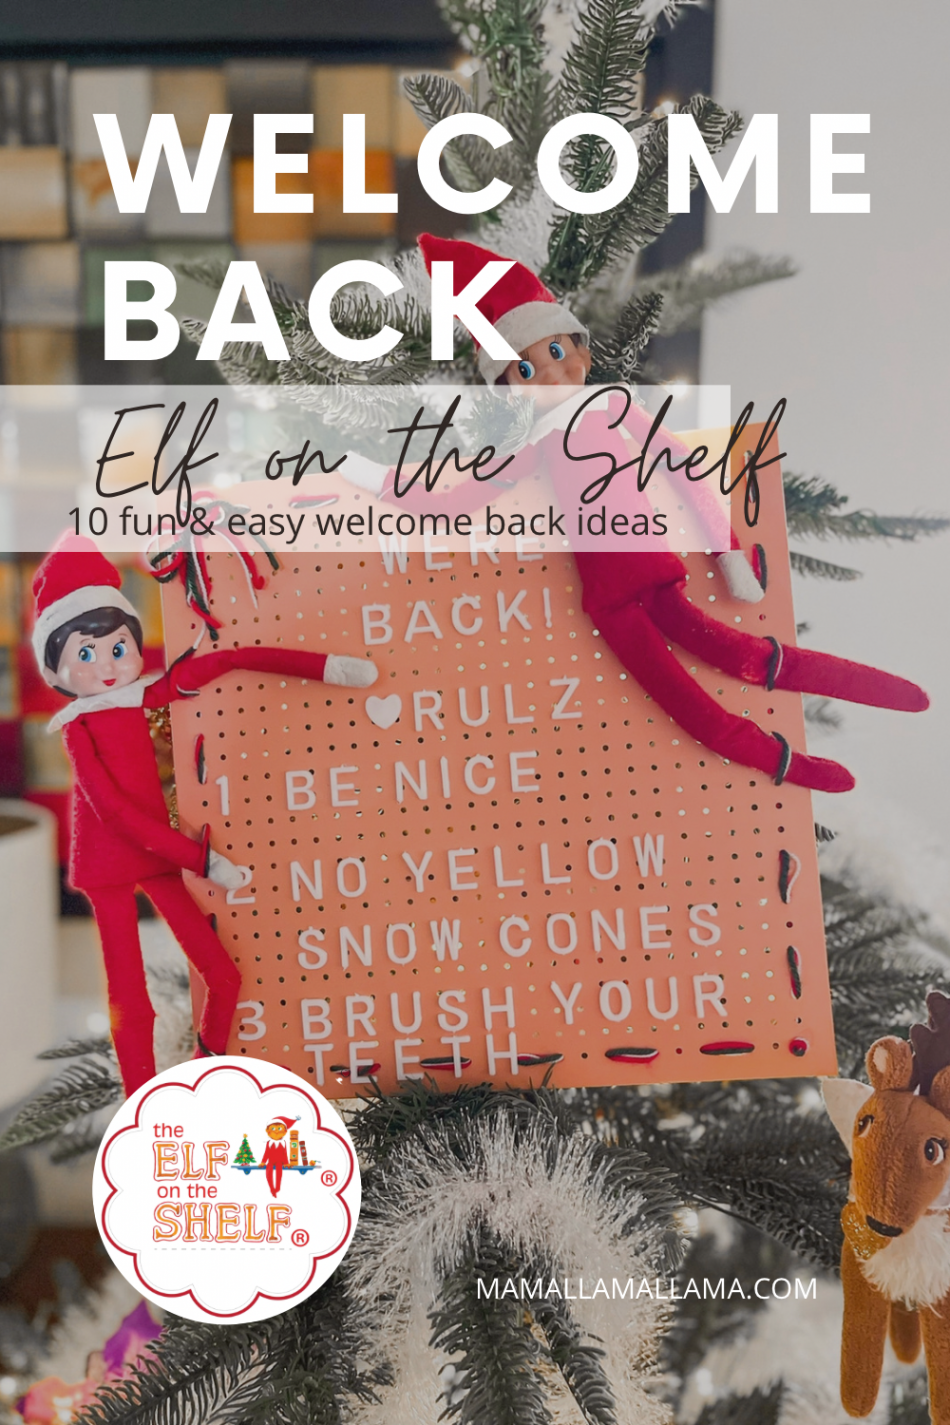 Welcome Back Elf on the Shelf Ideas  Mamallamallama on the weekly